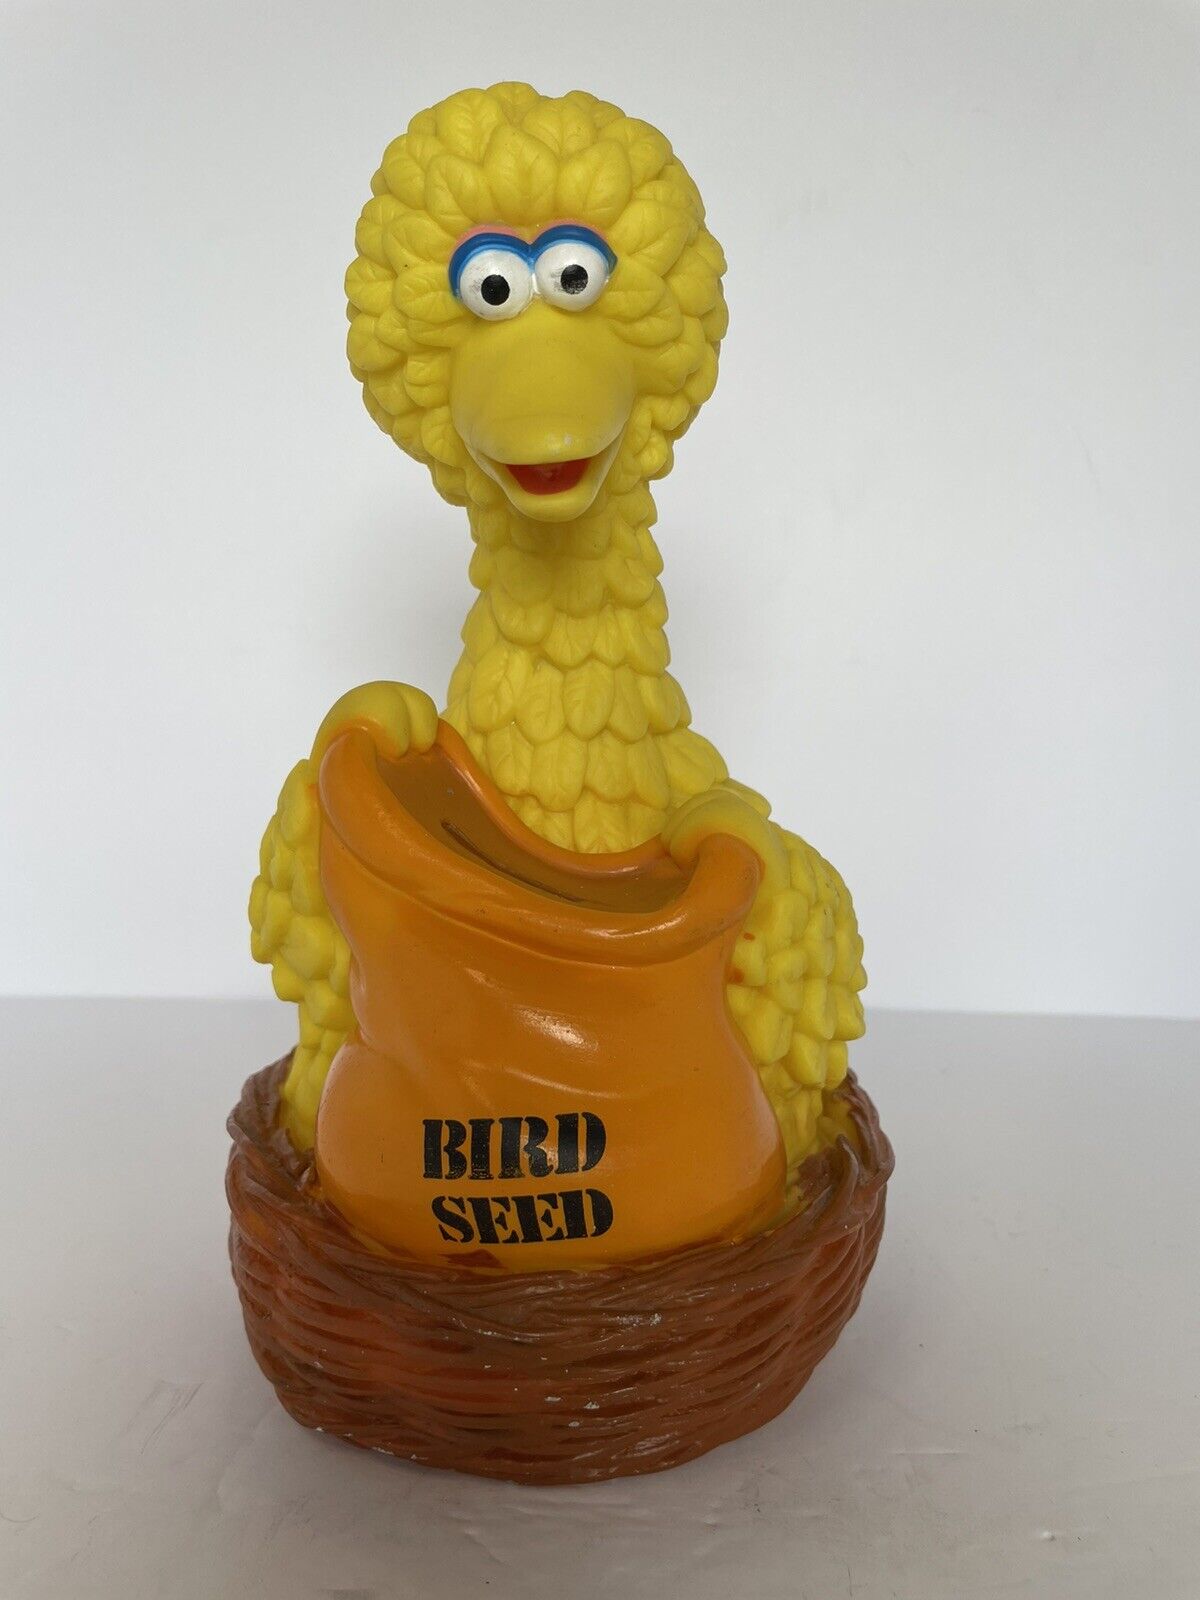 Vintage Big Bird Seed Money Coin Piggy Bank Sesame Street Illco Toy. Muppets Co.